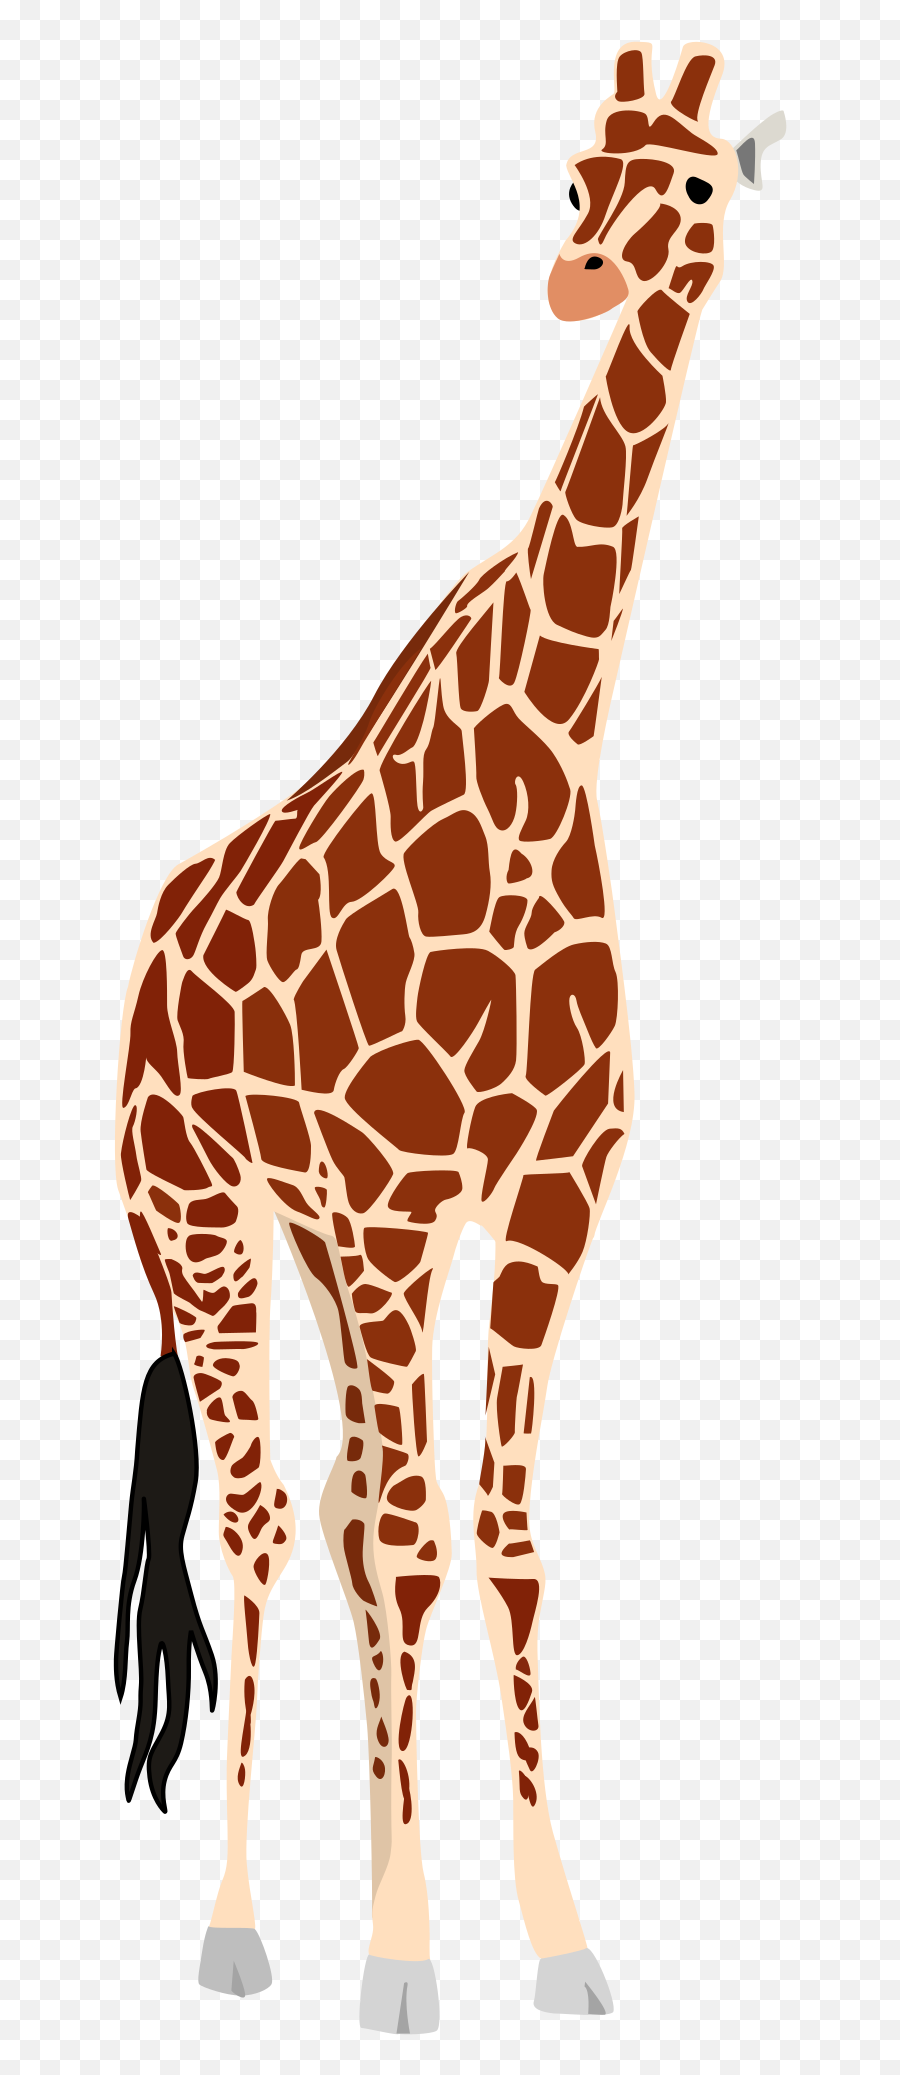 Giraffe Png Clip Arts For Web - Giraffe Vector Free,Giraffe Png